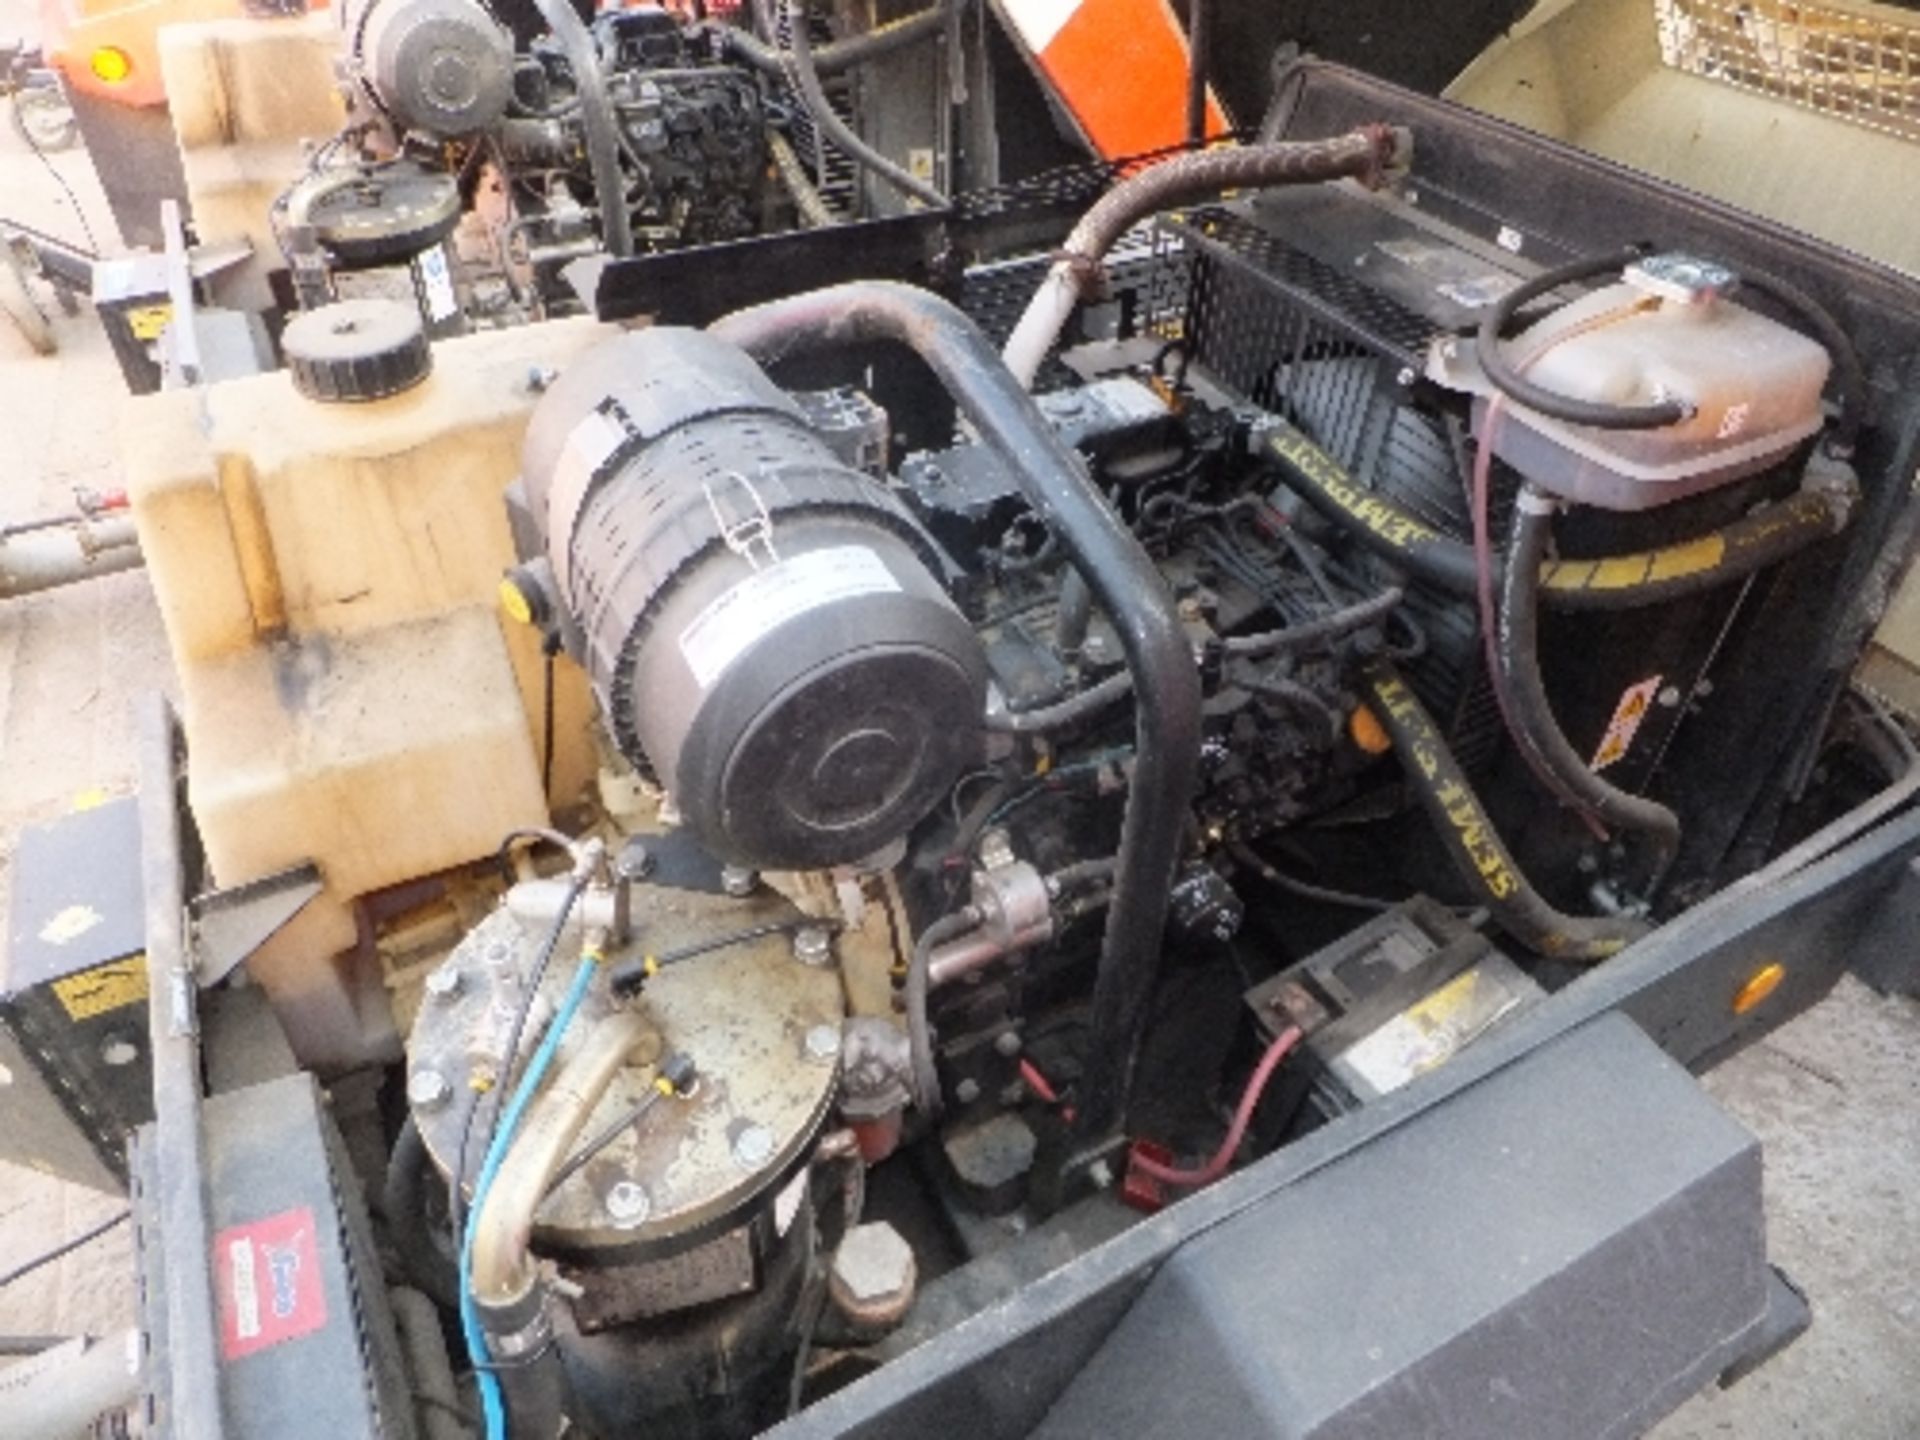 Doosan 7/31e compressor/generator (2011) 53 hrs showing RMA WLCA12321910 - Image 2 of 3